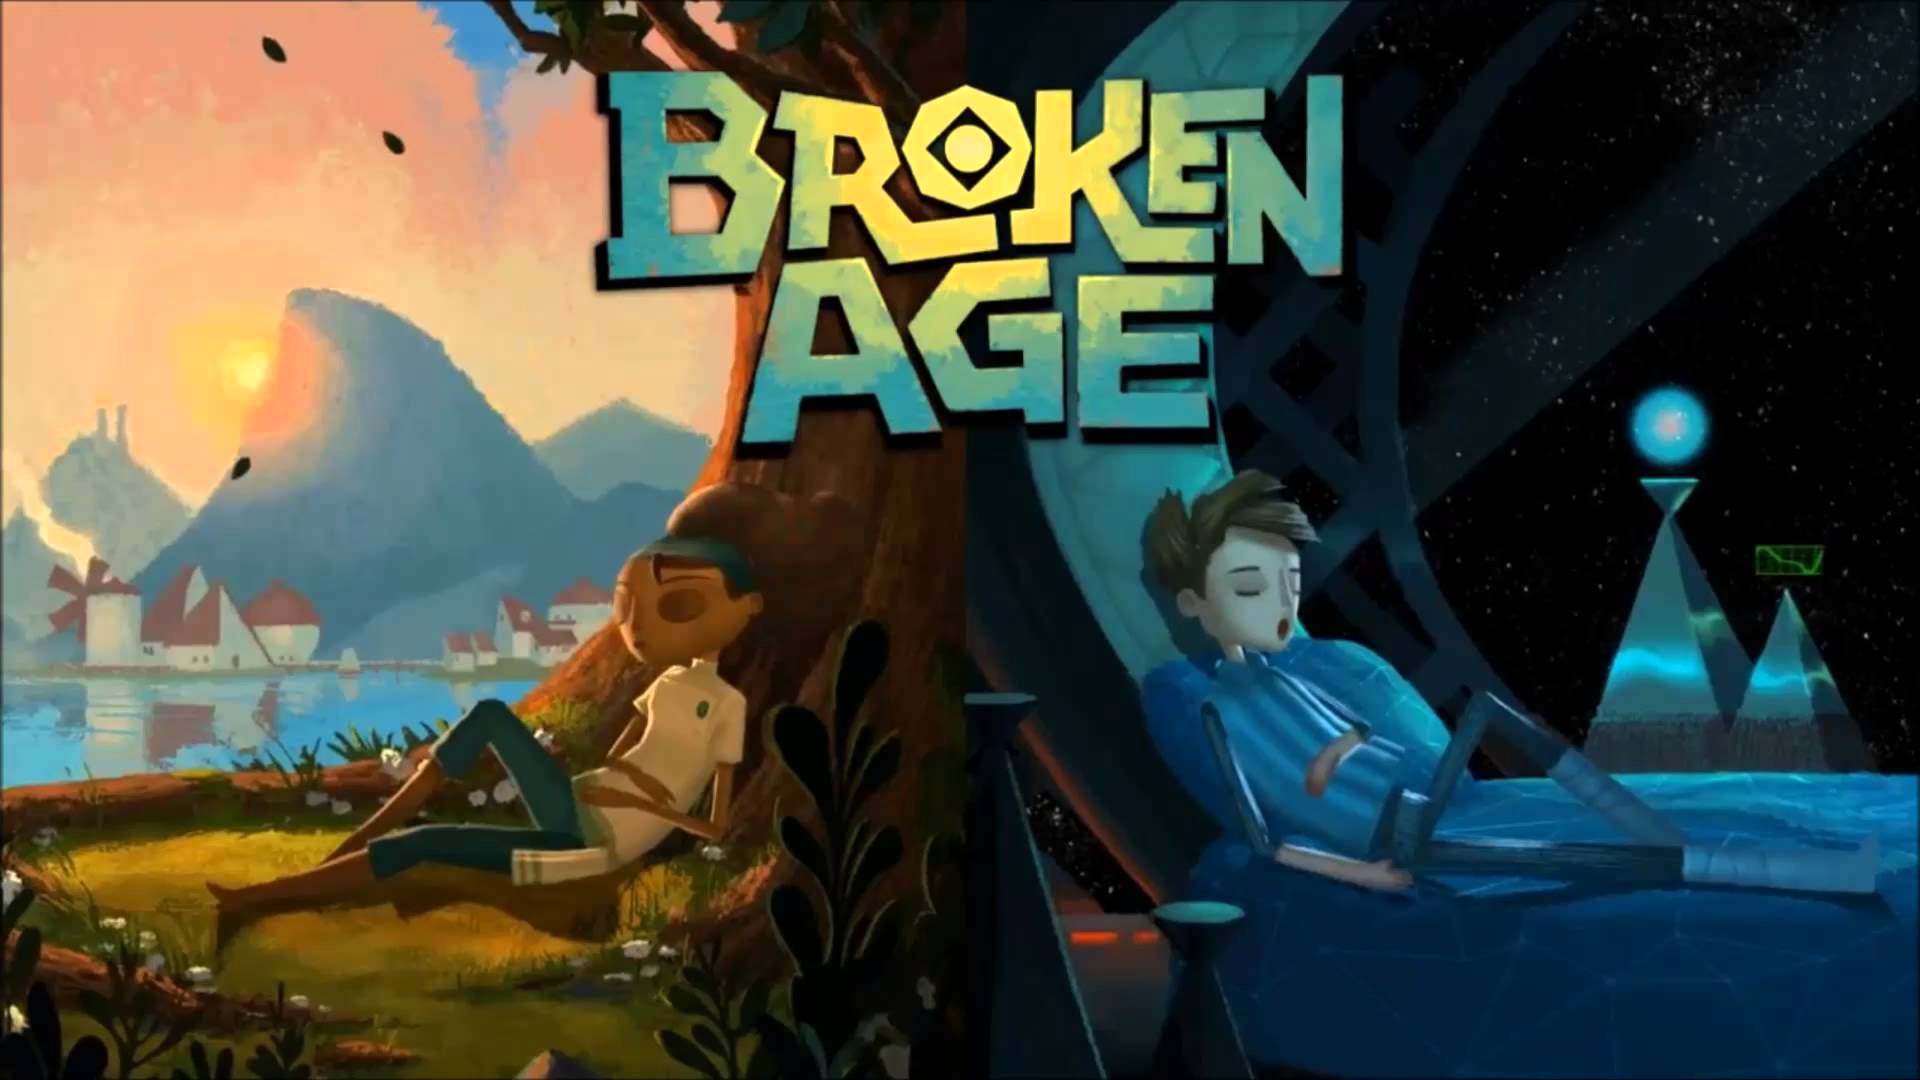 Broken Age Act 1 Review: Infinite Possibilities